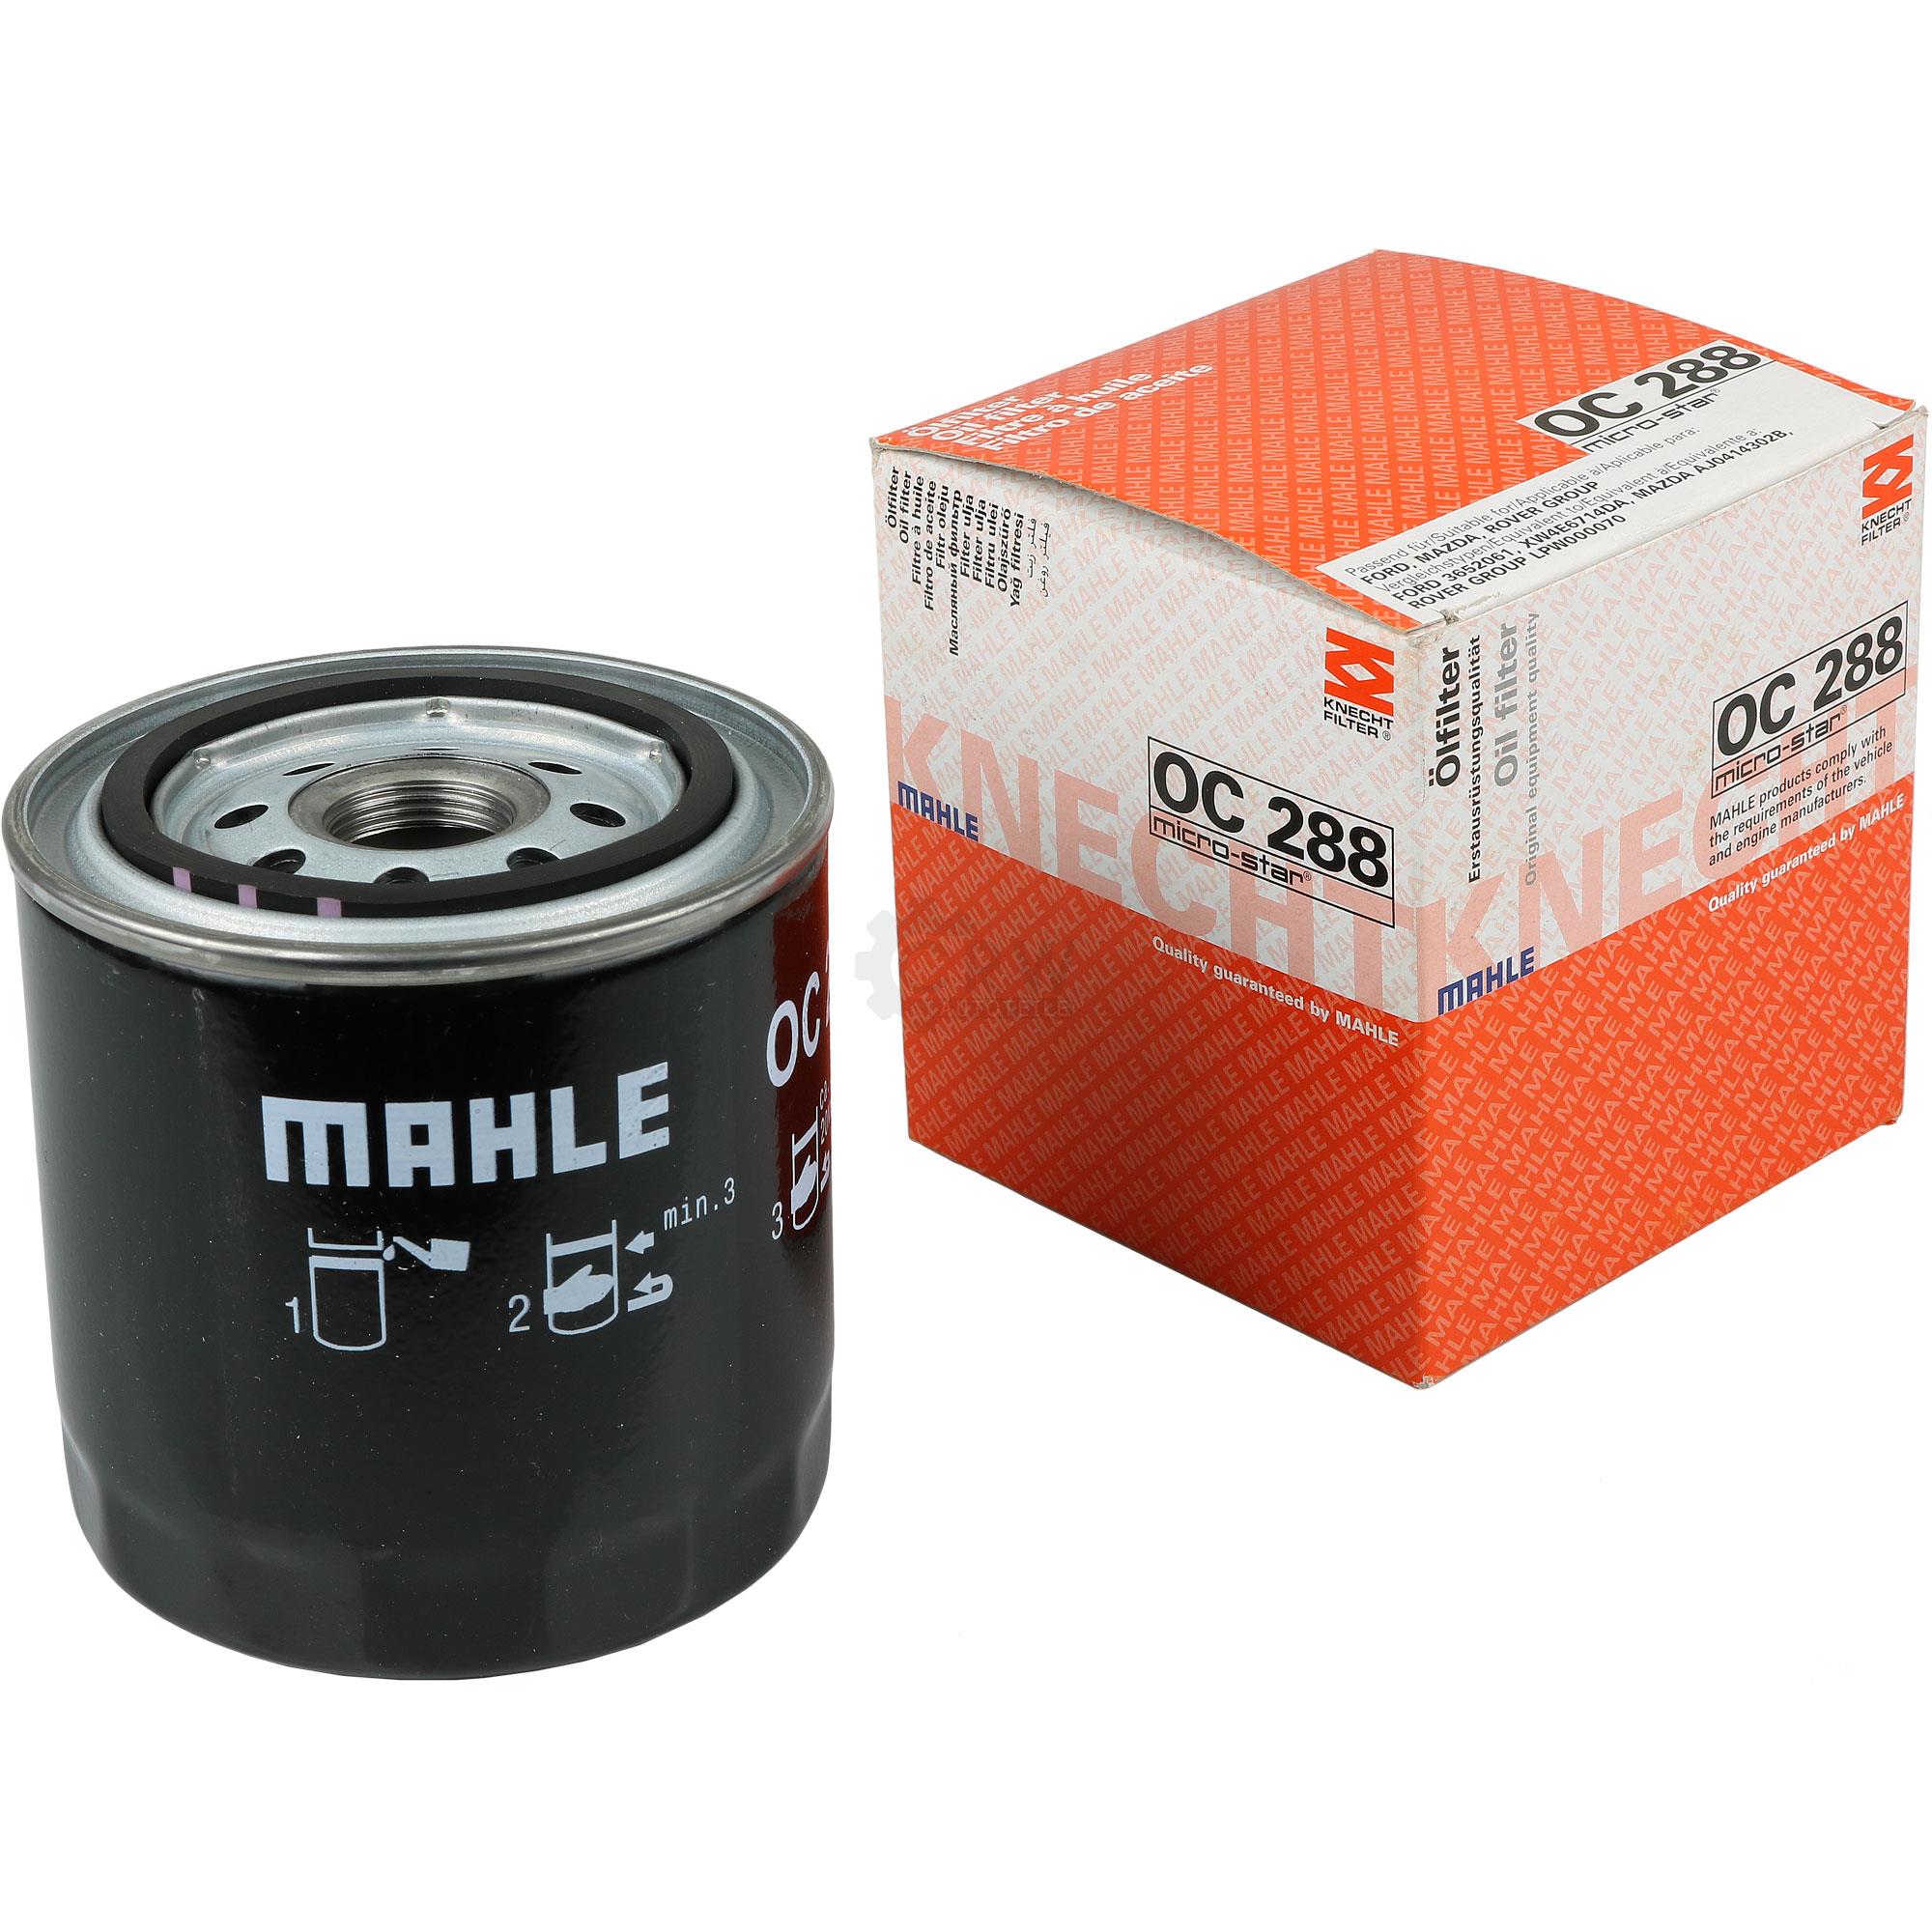 MAHLE / KNECHT Ölfilter OC 288 Oil Filter